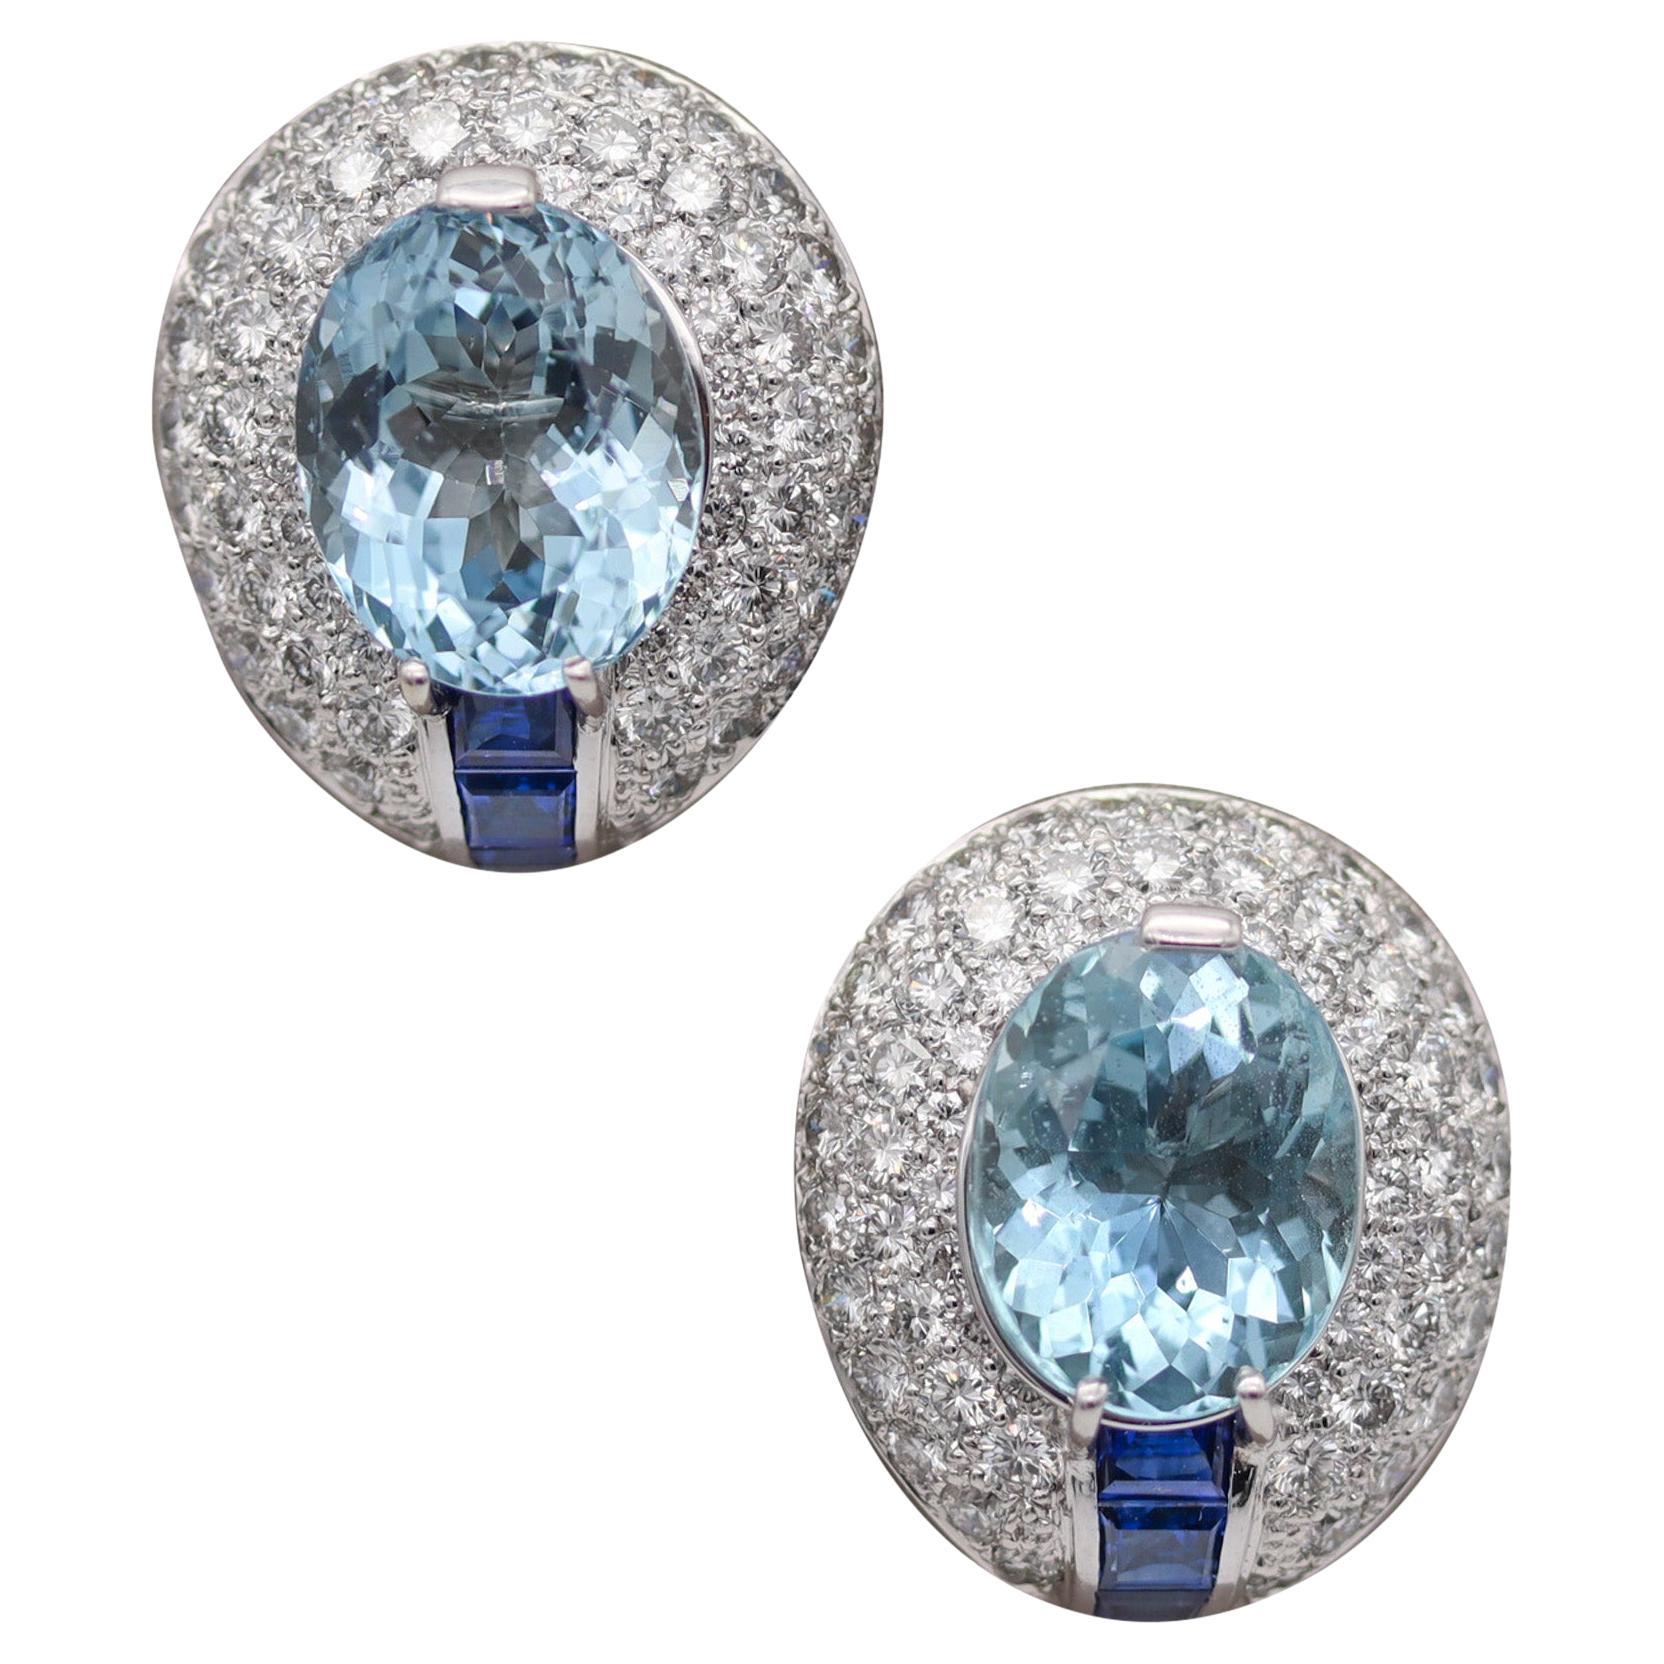 Hemmerle Munich Platinum Earrings With 30.58 Ctw Aquamarines Diamonds Sapphires For Sale